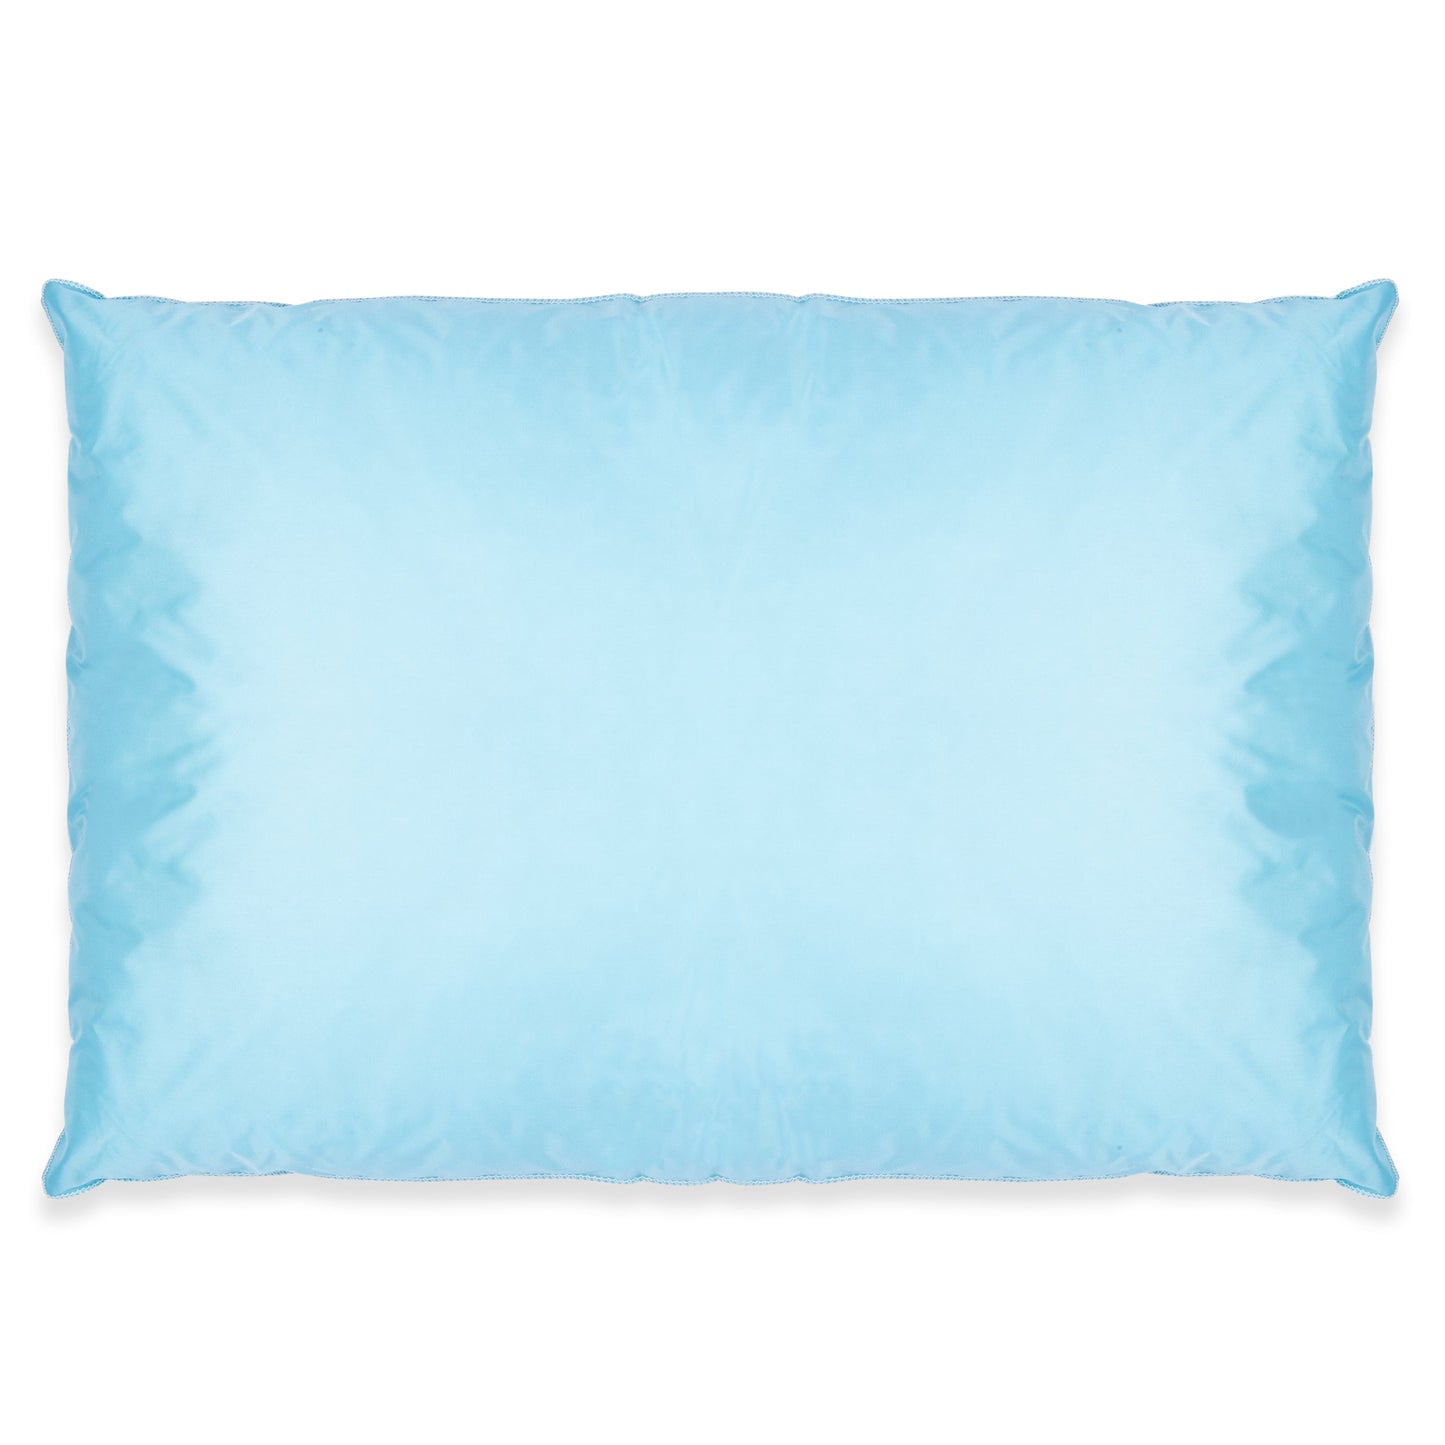 American Dawn | 21X27 Inch Light Blue Pillow